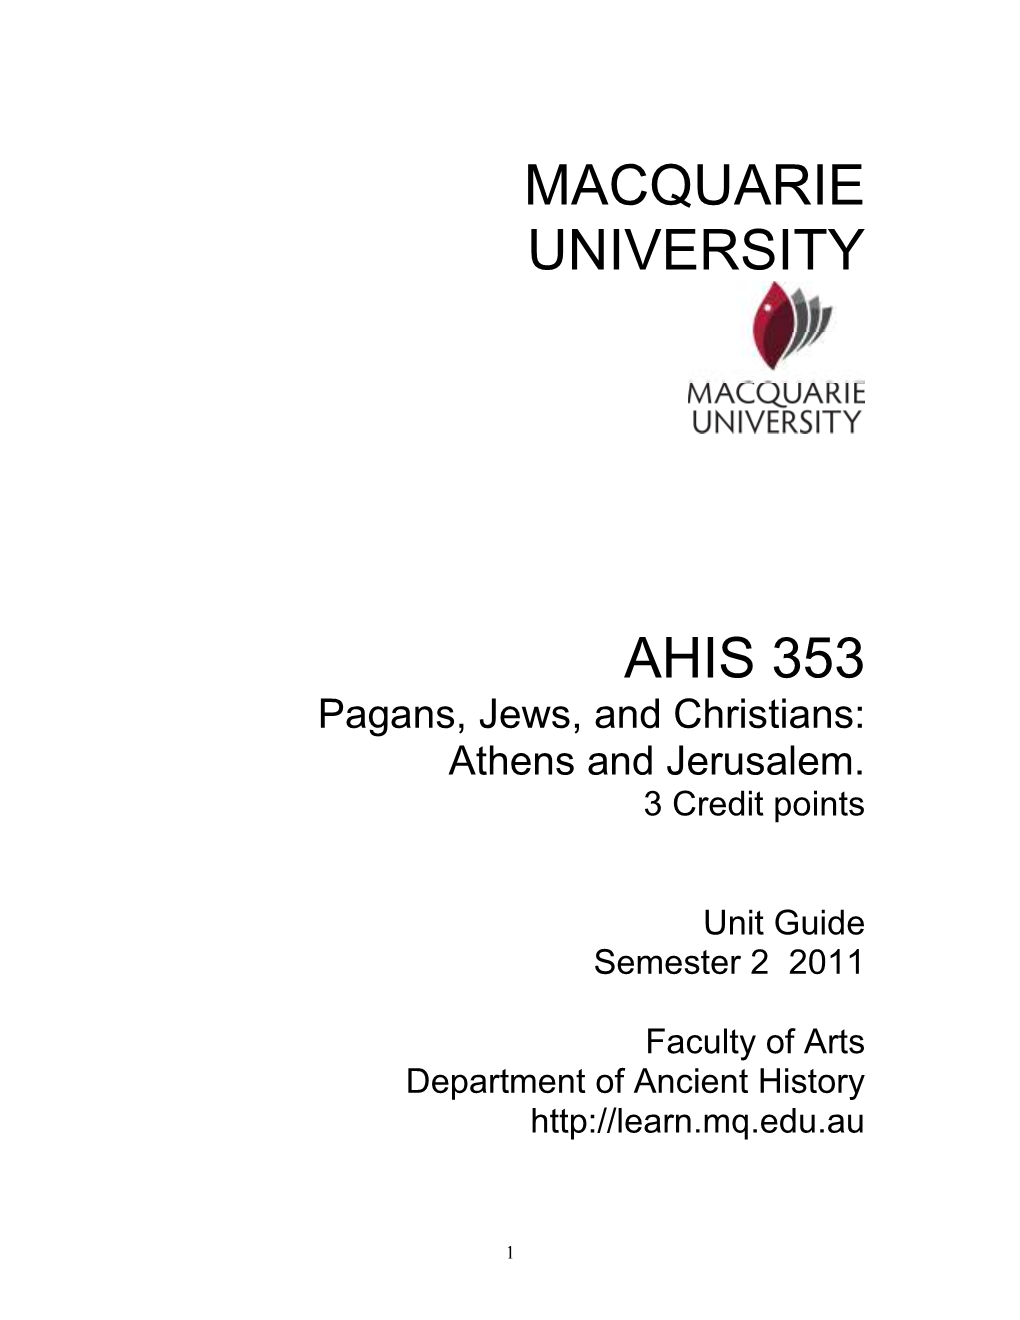 Macquarie University Ahis